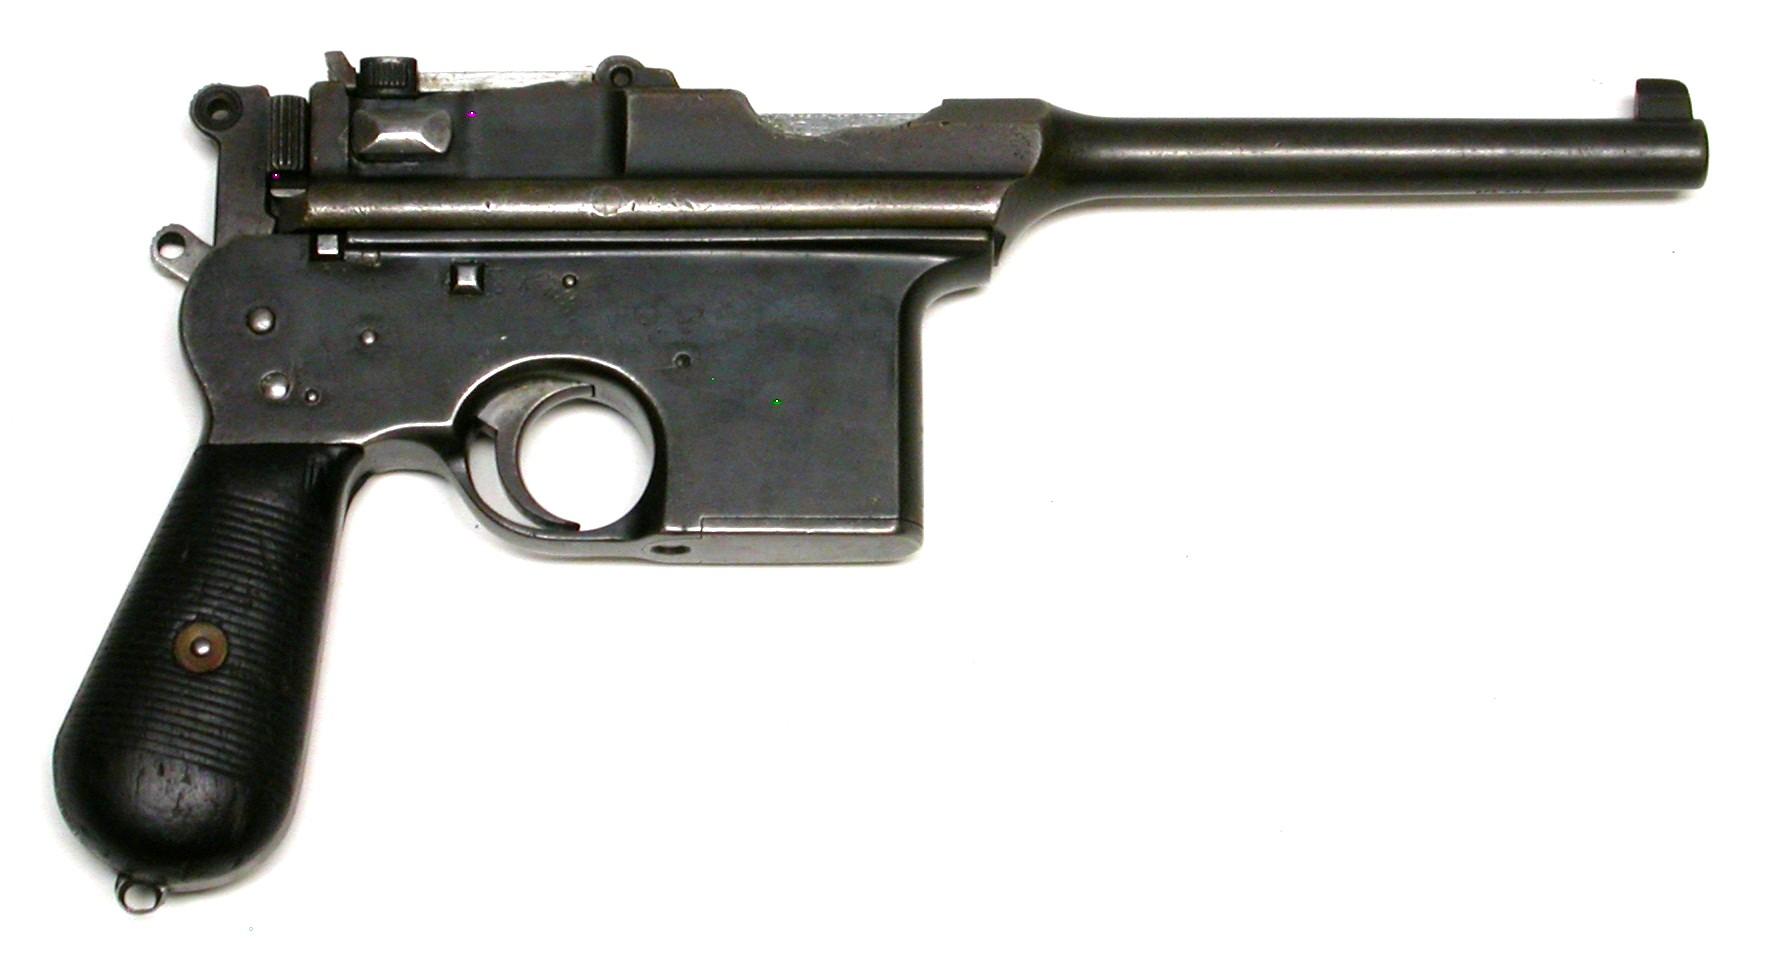 Spanish Astra Model 900 7.63mm Broomhandle Semi-Automatic Pistol - FFL #4339 (RH1)